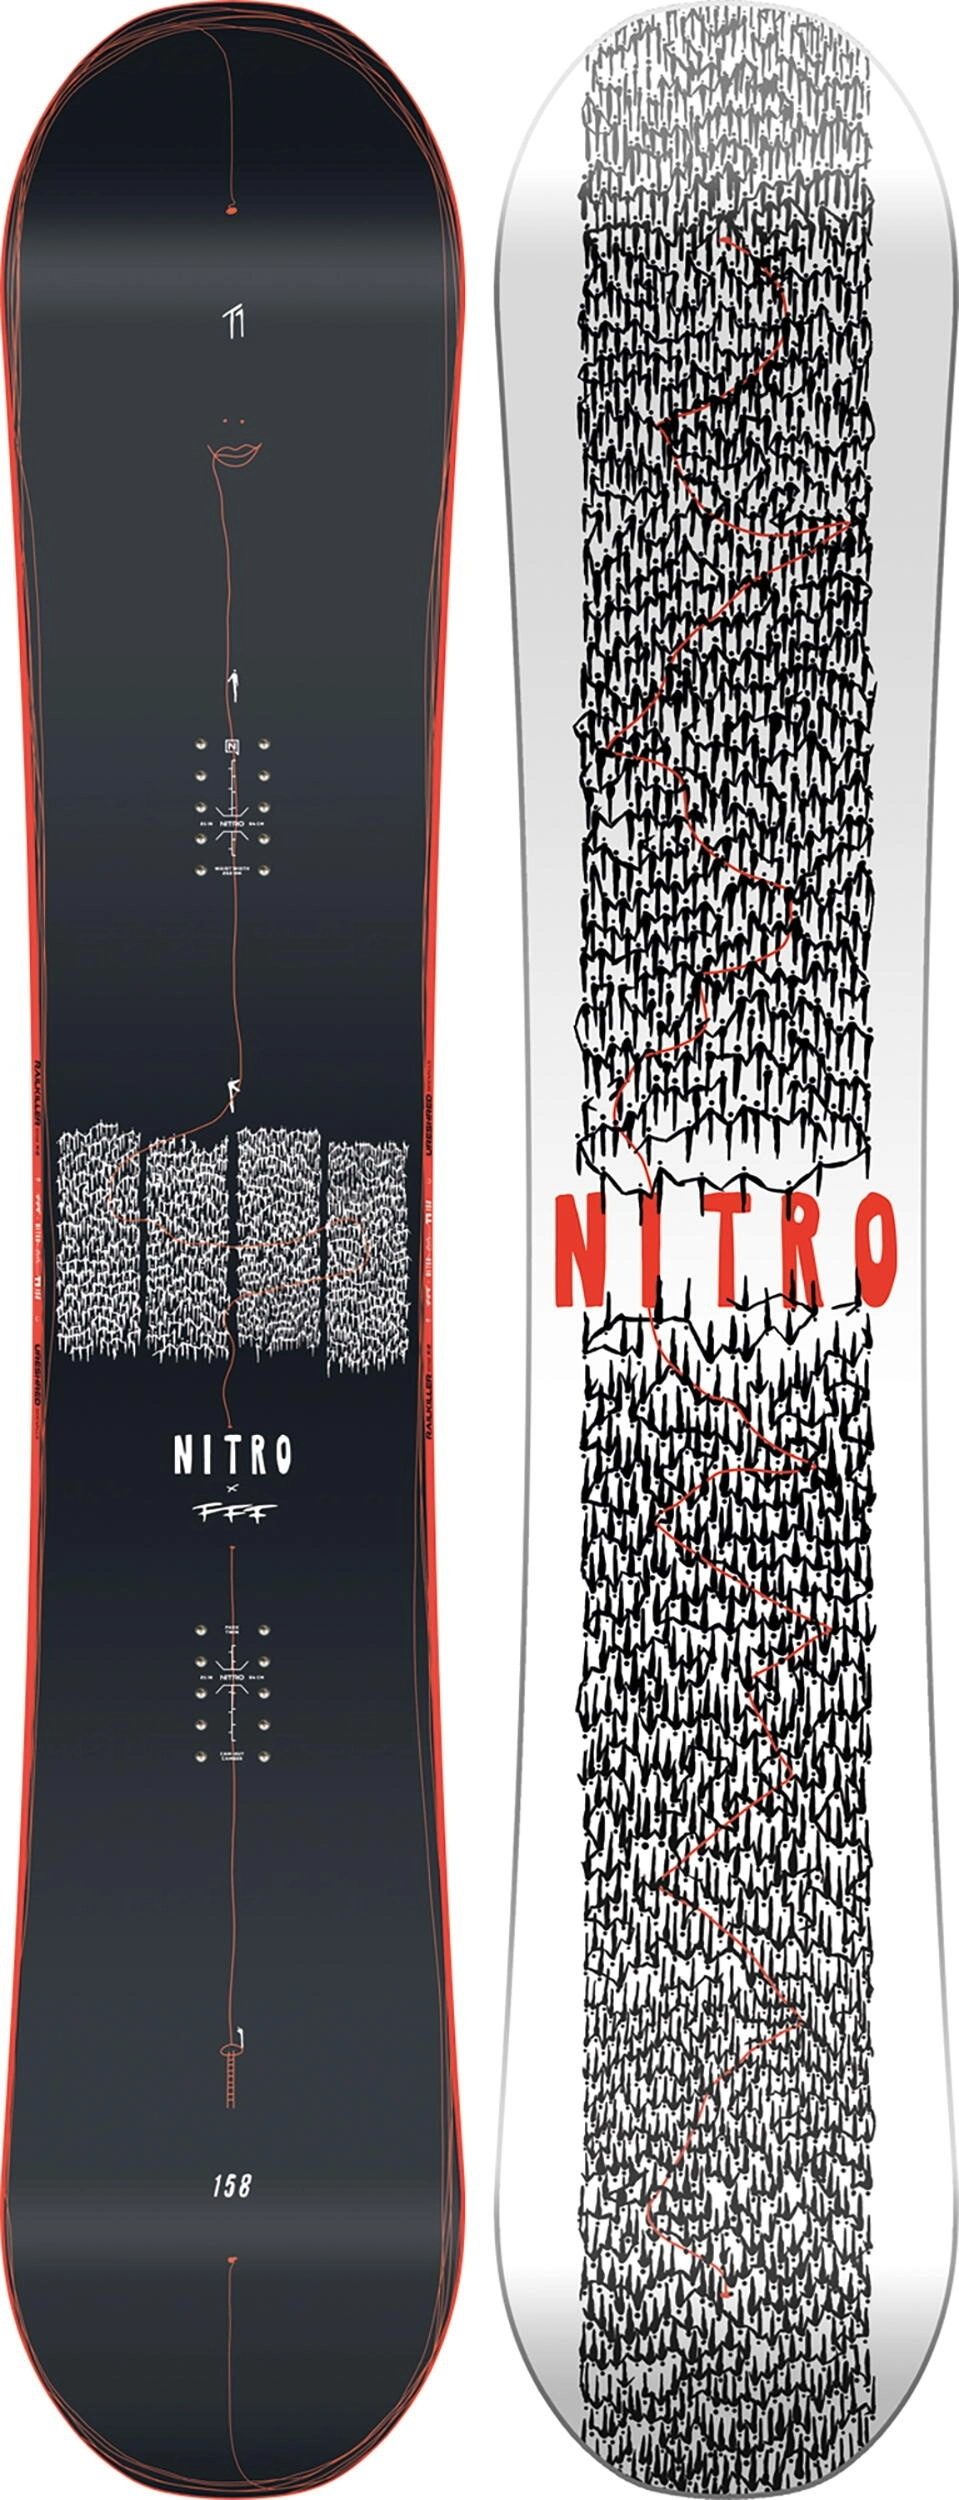 Nitro T1 x FFF freestyle snowboard